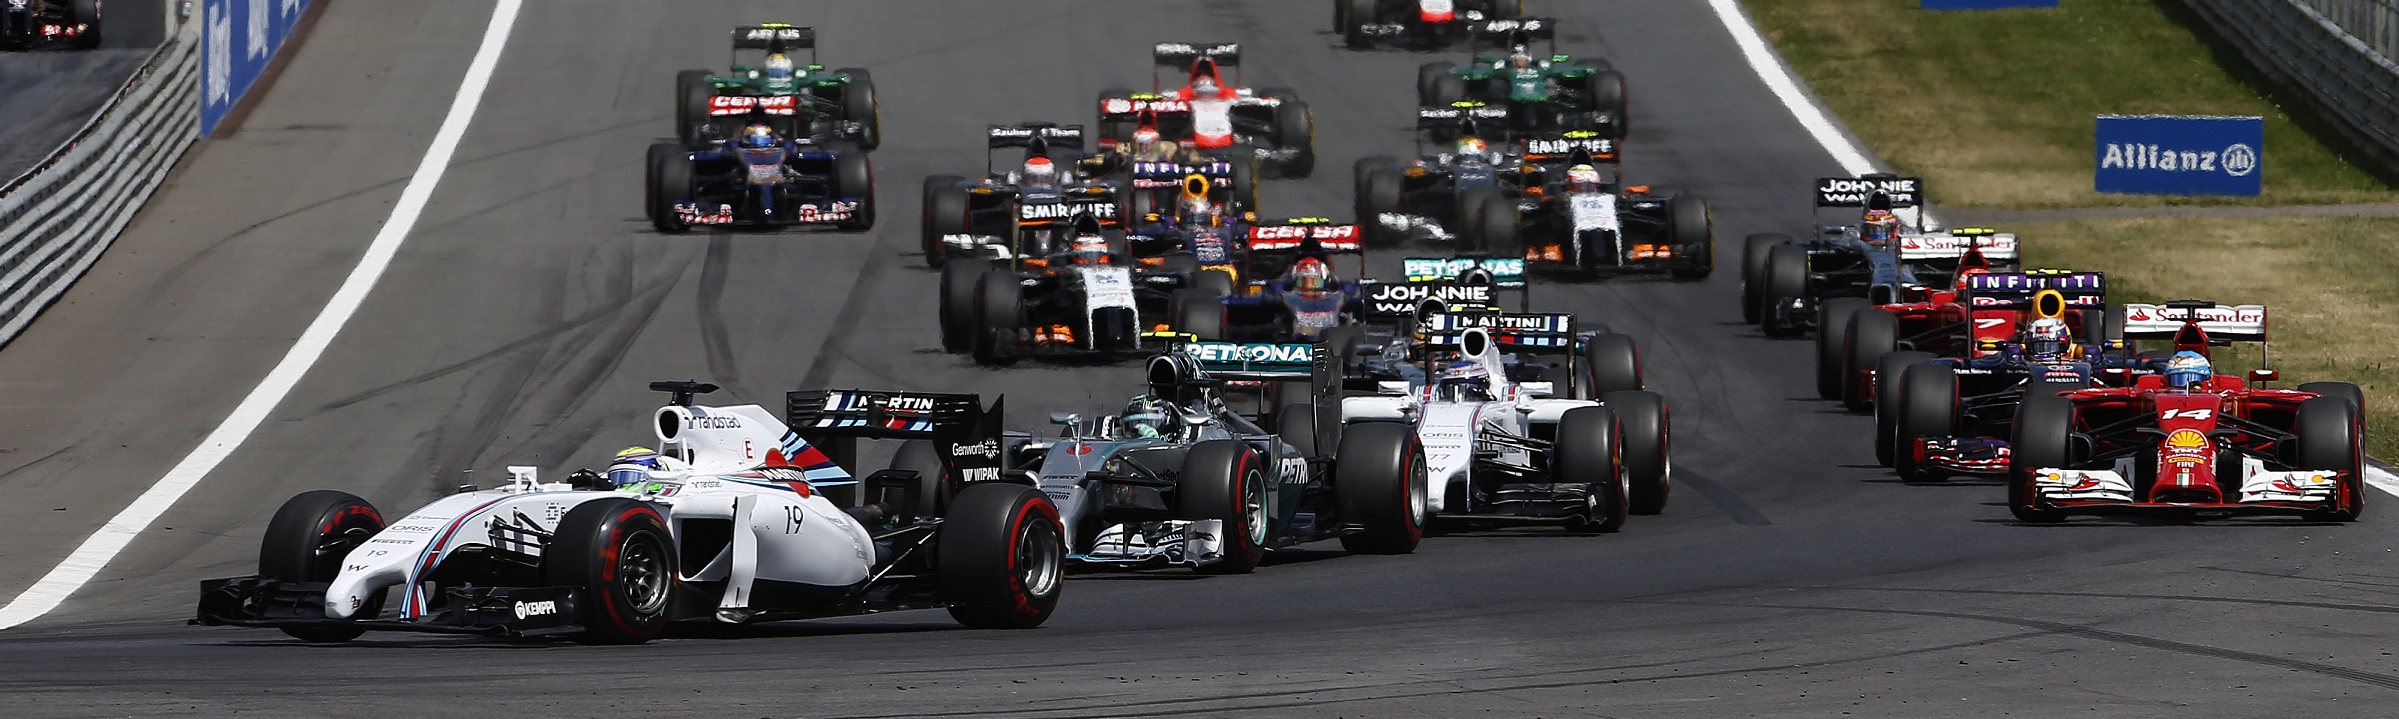 2014 Australian Grand Prix - Wikipedia